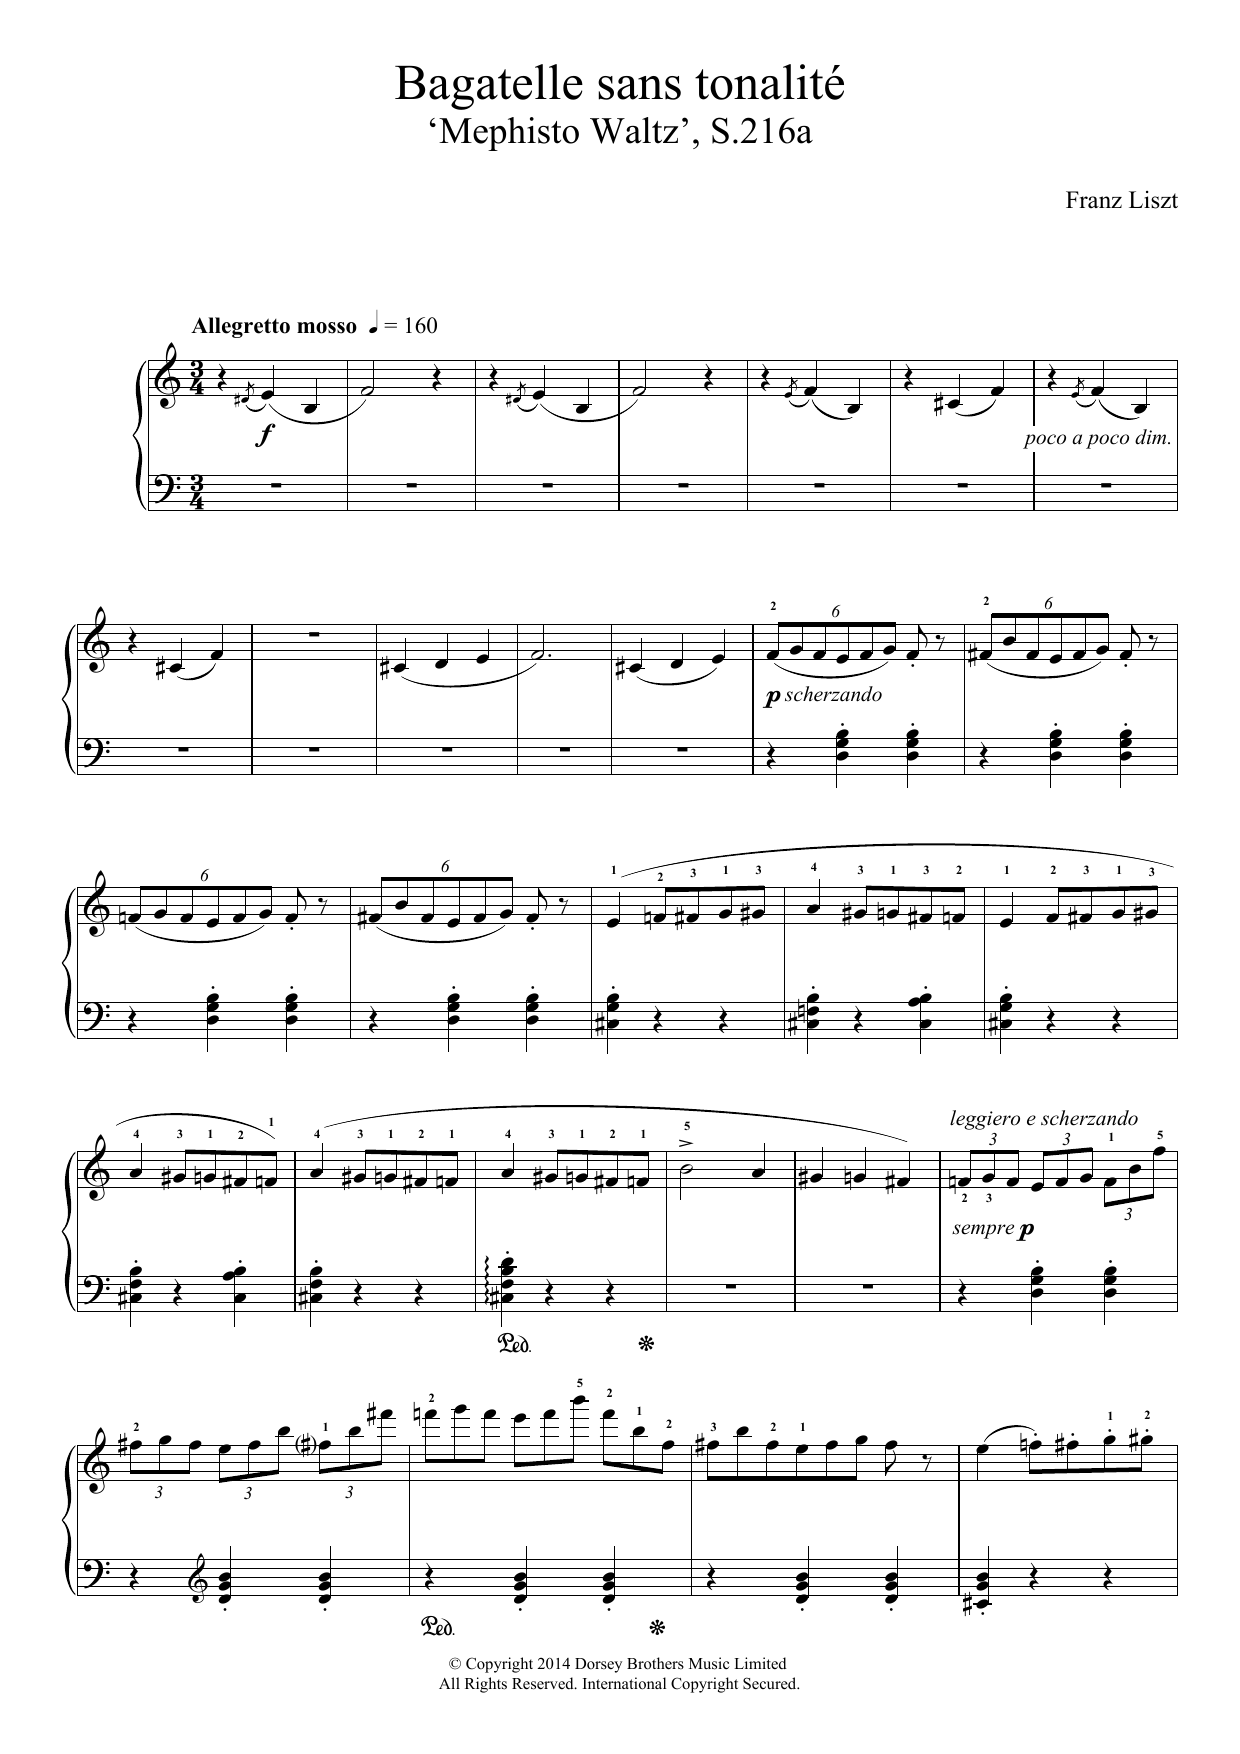 Franz Liszt Bagatelle Sans Tonalite (Fourth Mephisto Waltz) Sheet Music Notes & Chords for Piano - Download or Print PDF